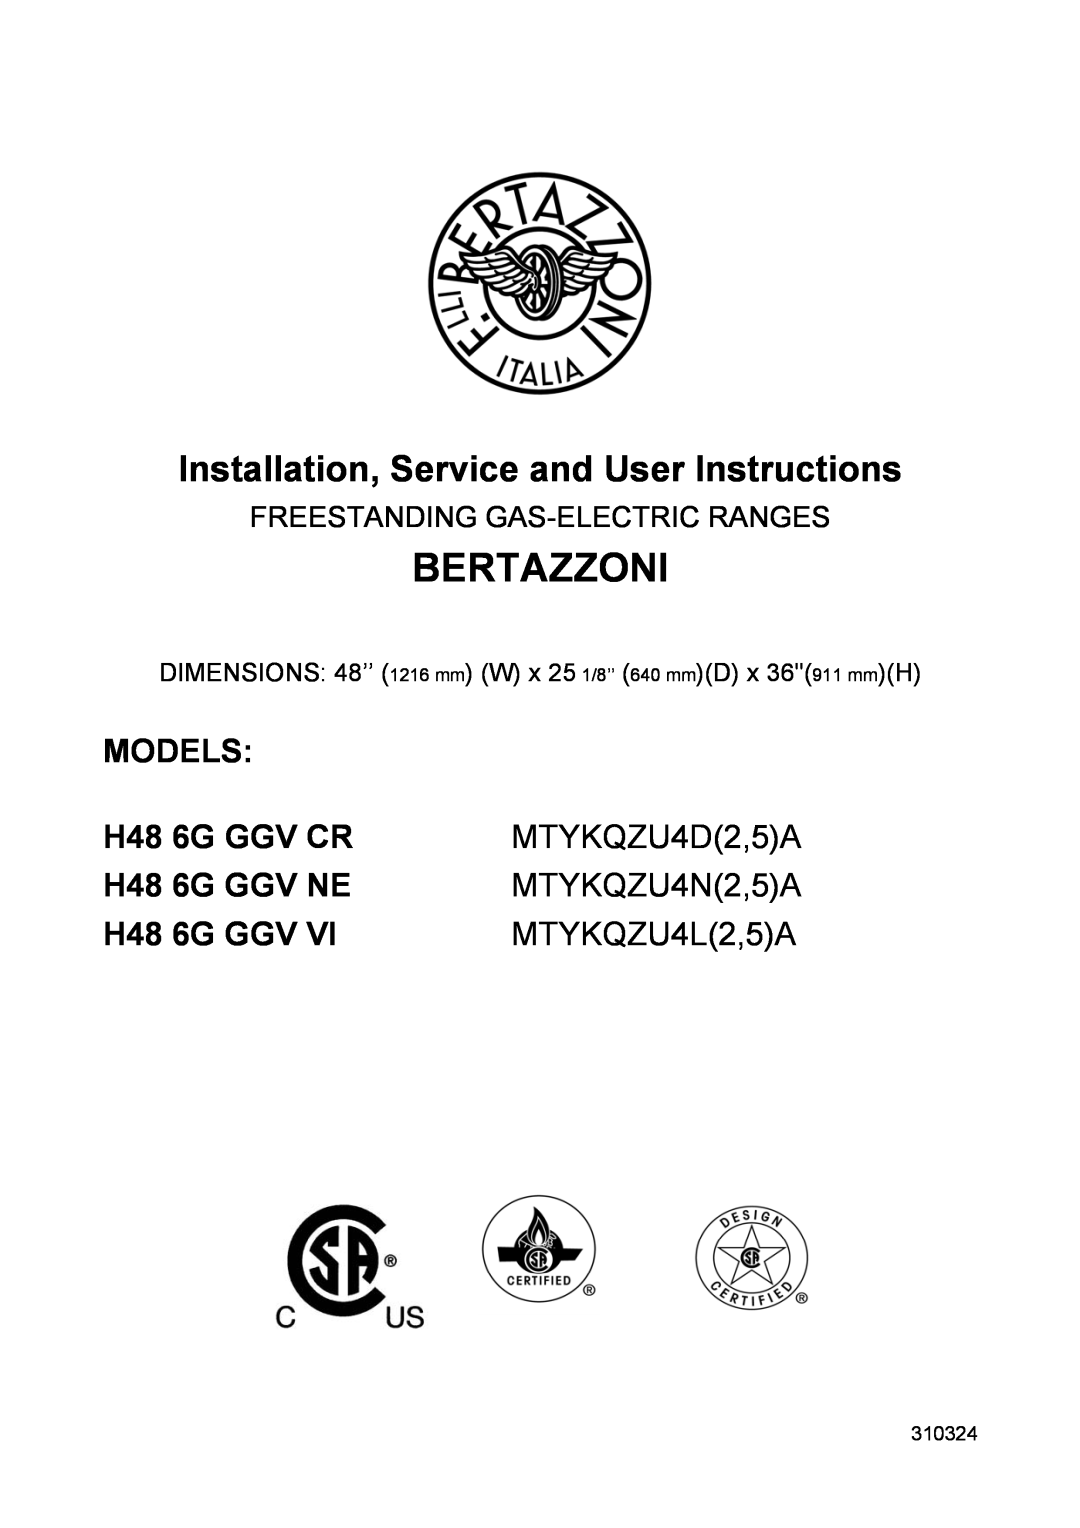 Bertazzoni H48 6G GGV VI dimensions Bertazzoni, Installation, Service and User Instructions, Models, 6G GGV CR, 6G GGV NE 